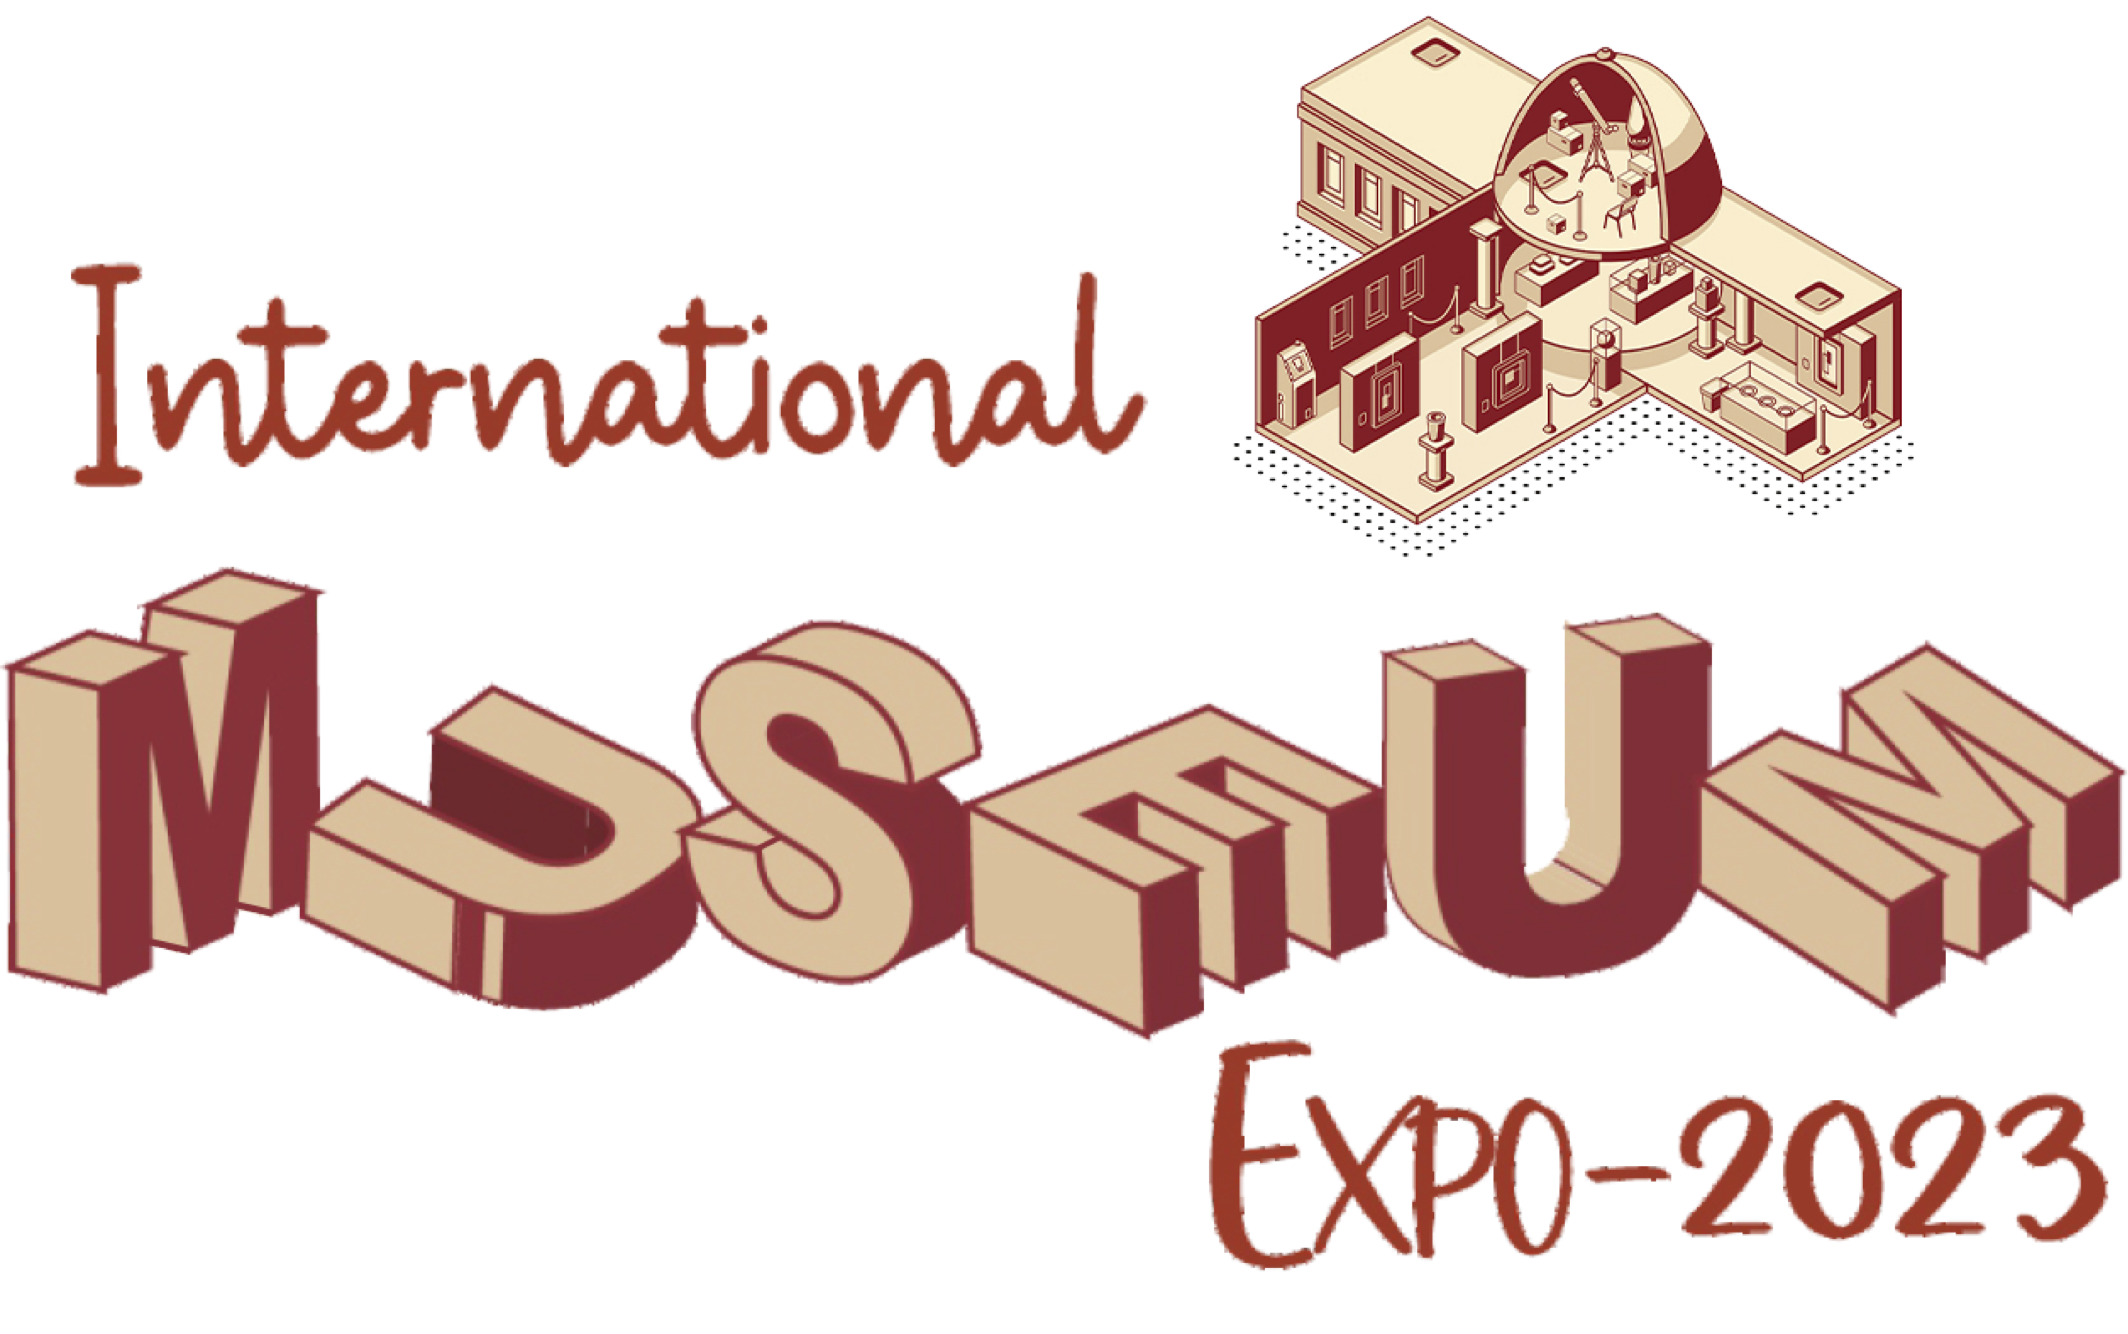 International Museum Expo-2023